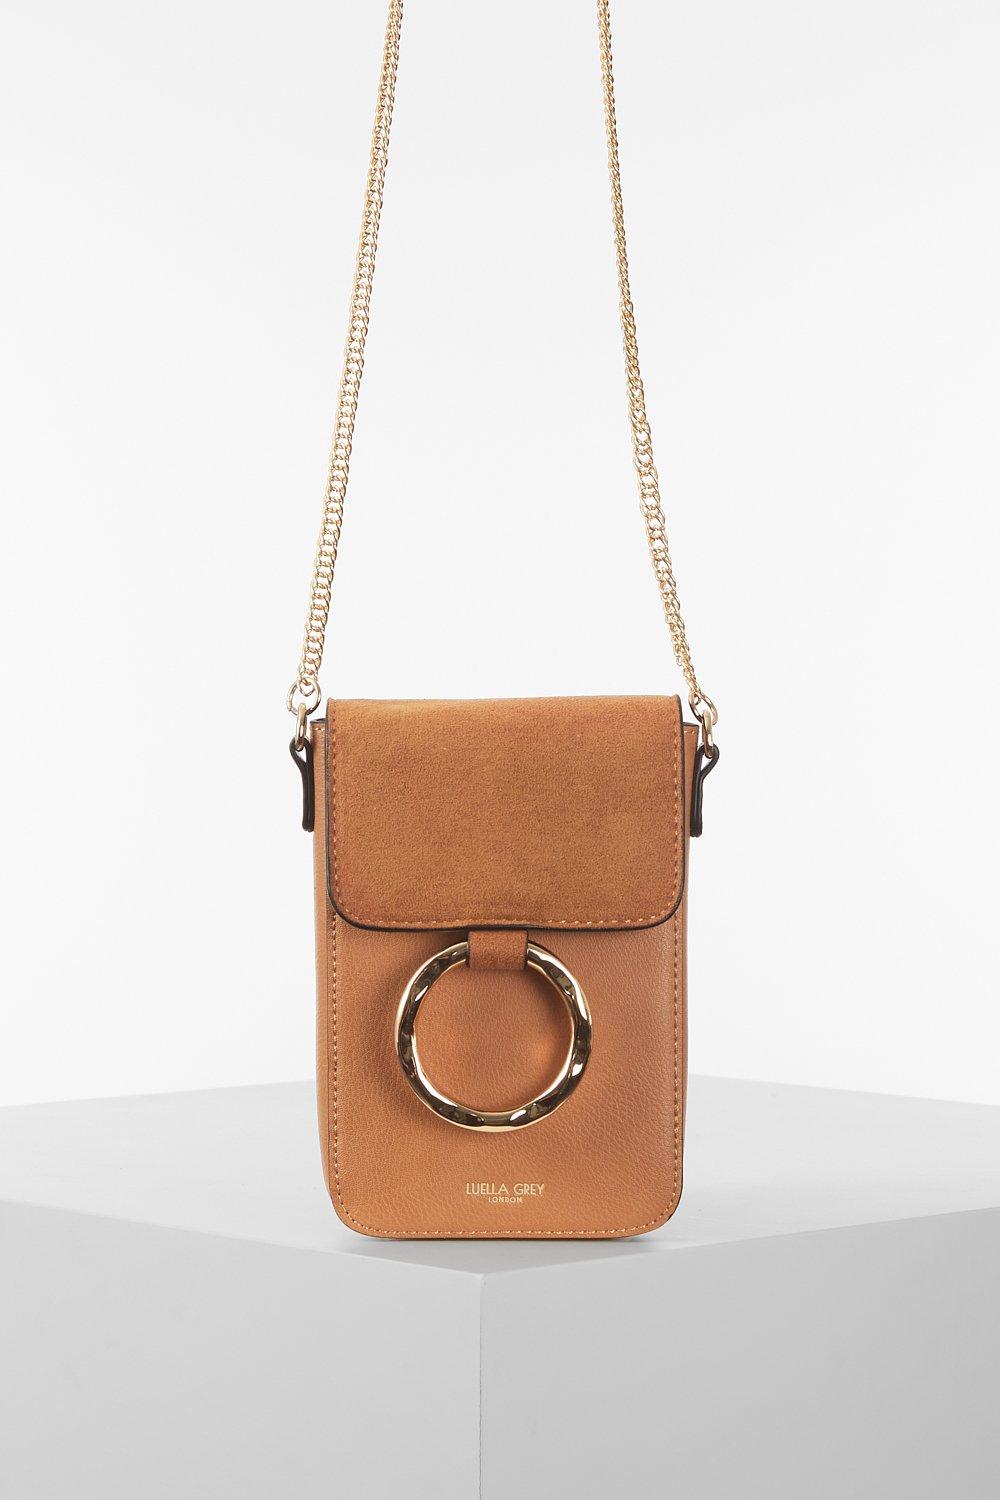 Luella Grey 'Chiara' Phone Bag | Debenhams